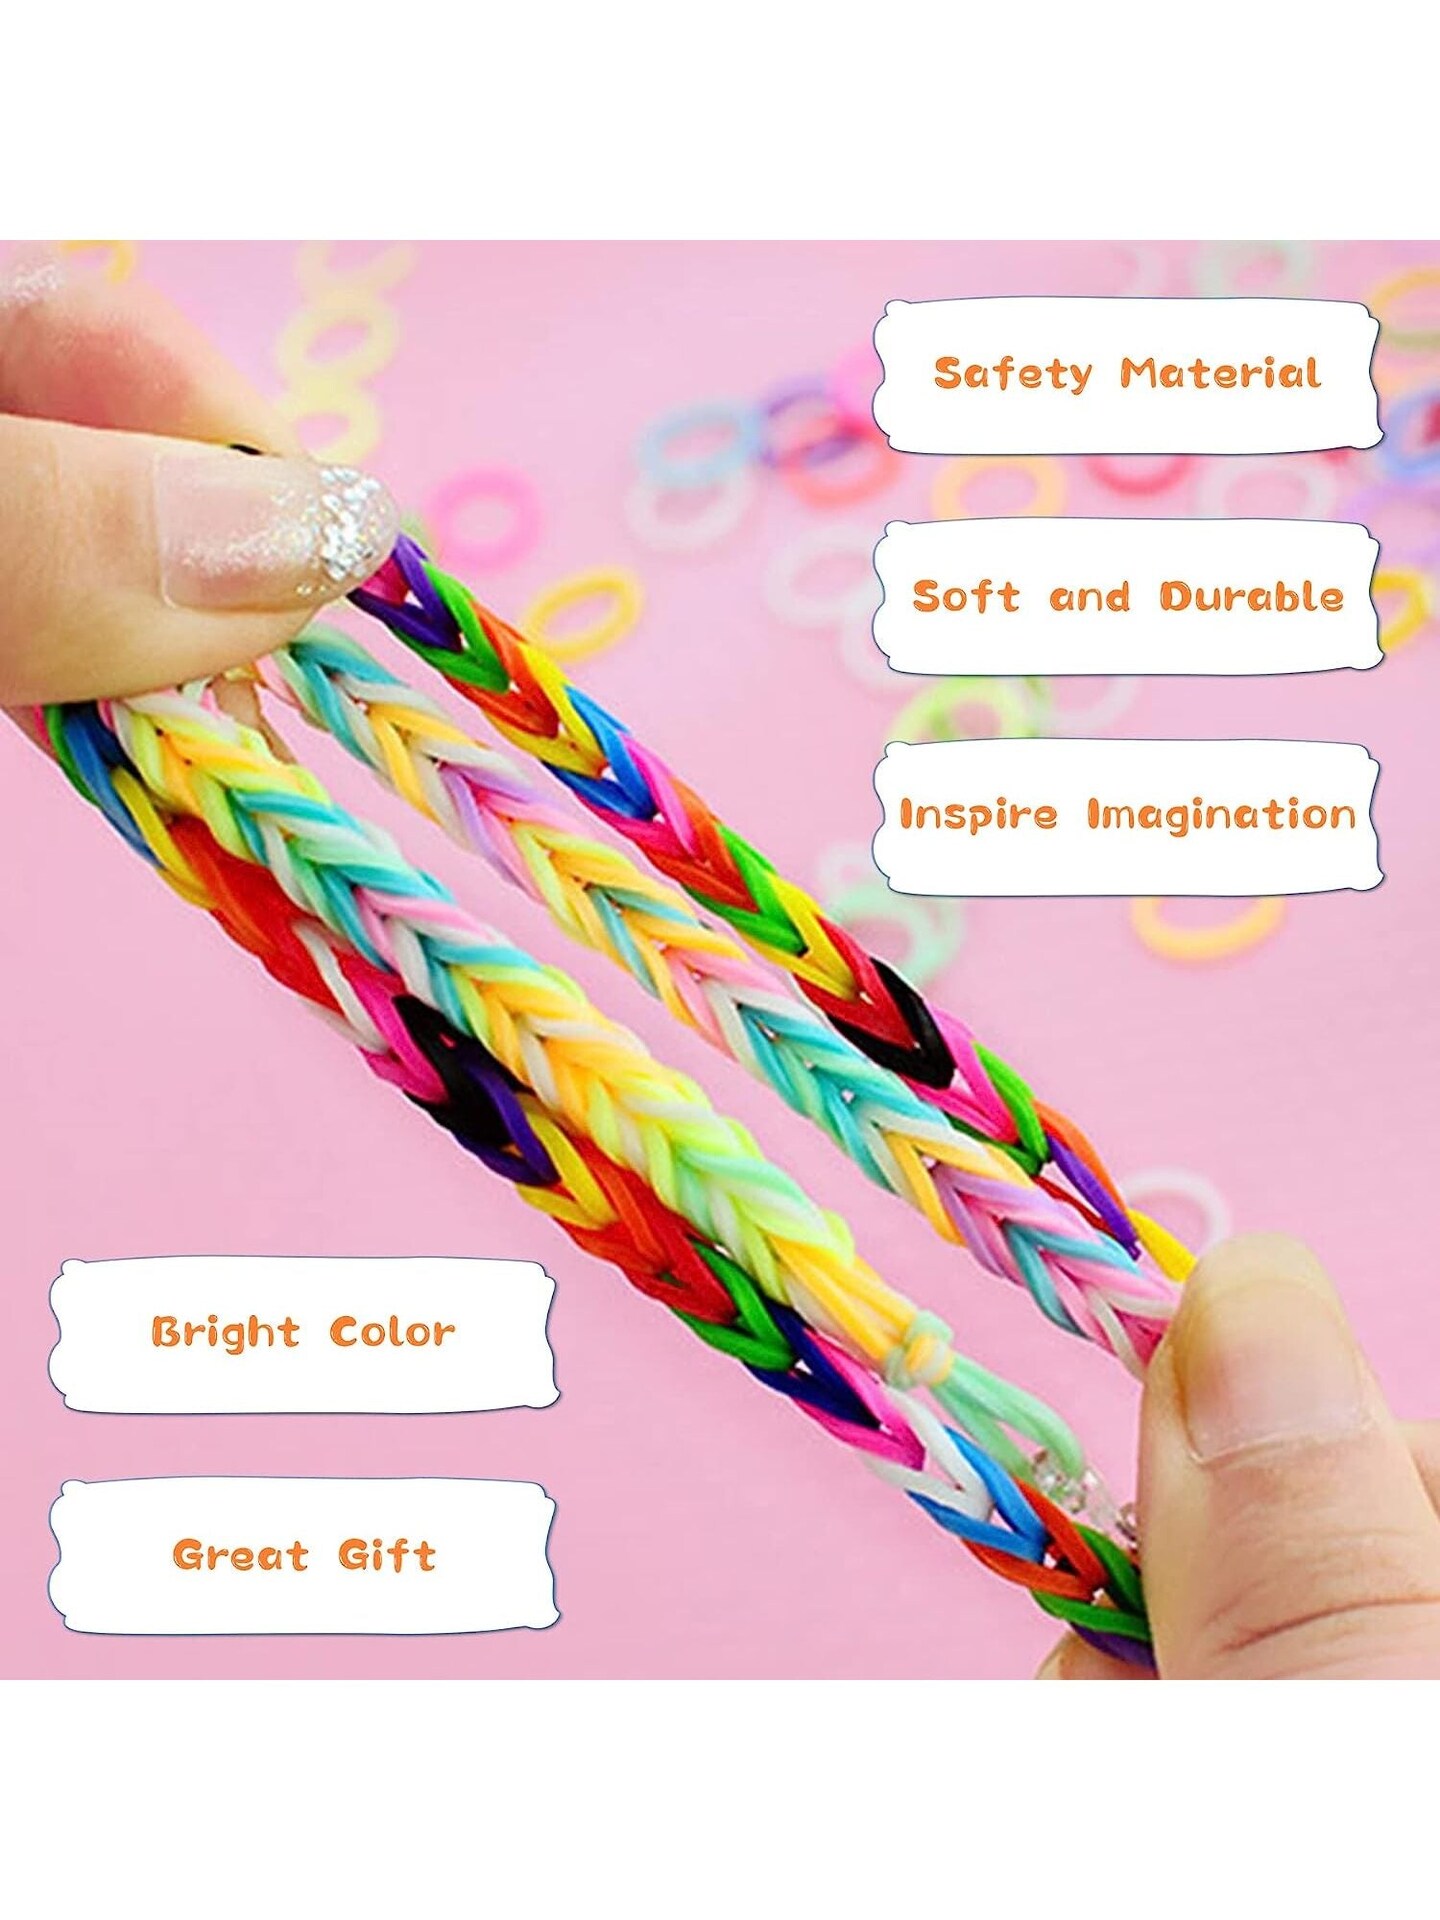 3000 Rubber Band Bracelet Kit, Colorful Loom Bracelet Making Kit